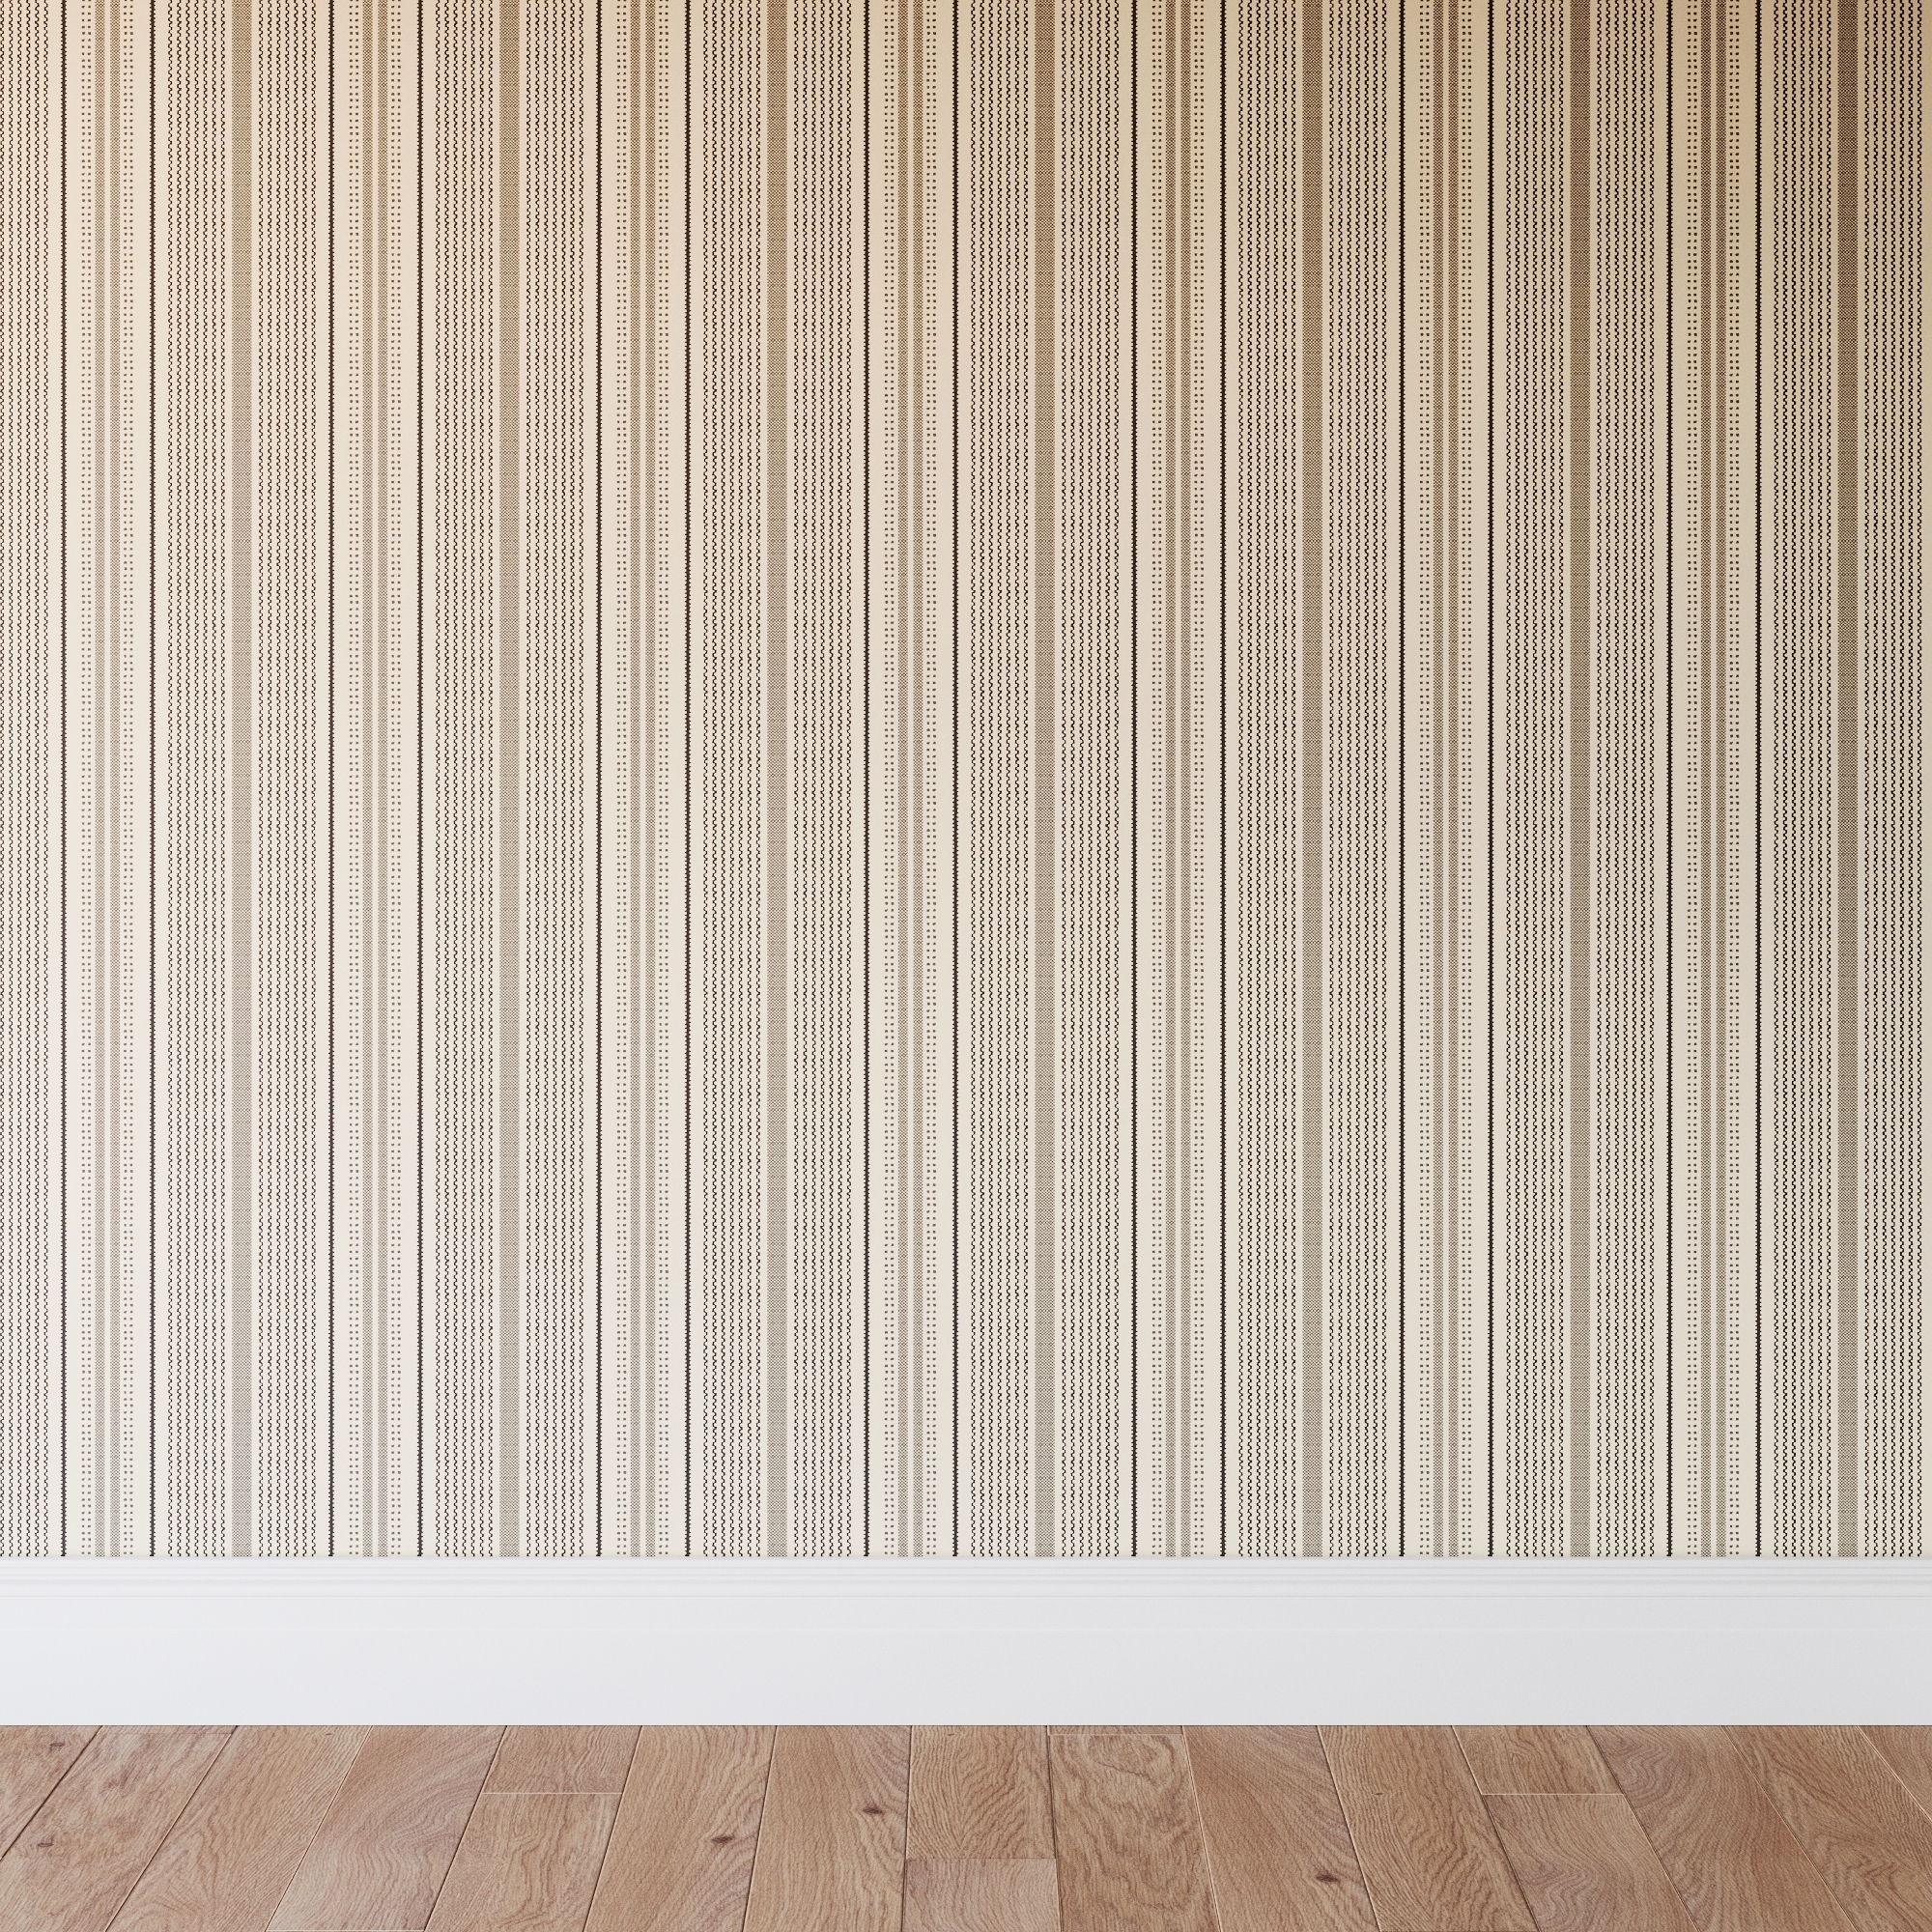 Peel and Stick Wallpaper Roll, Charcoal Newbury Stripe - Image 0